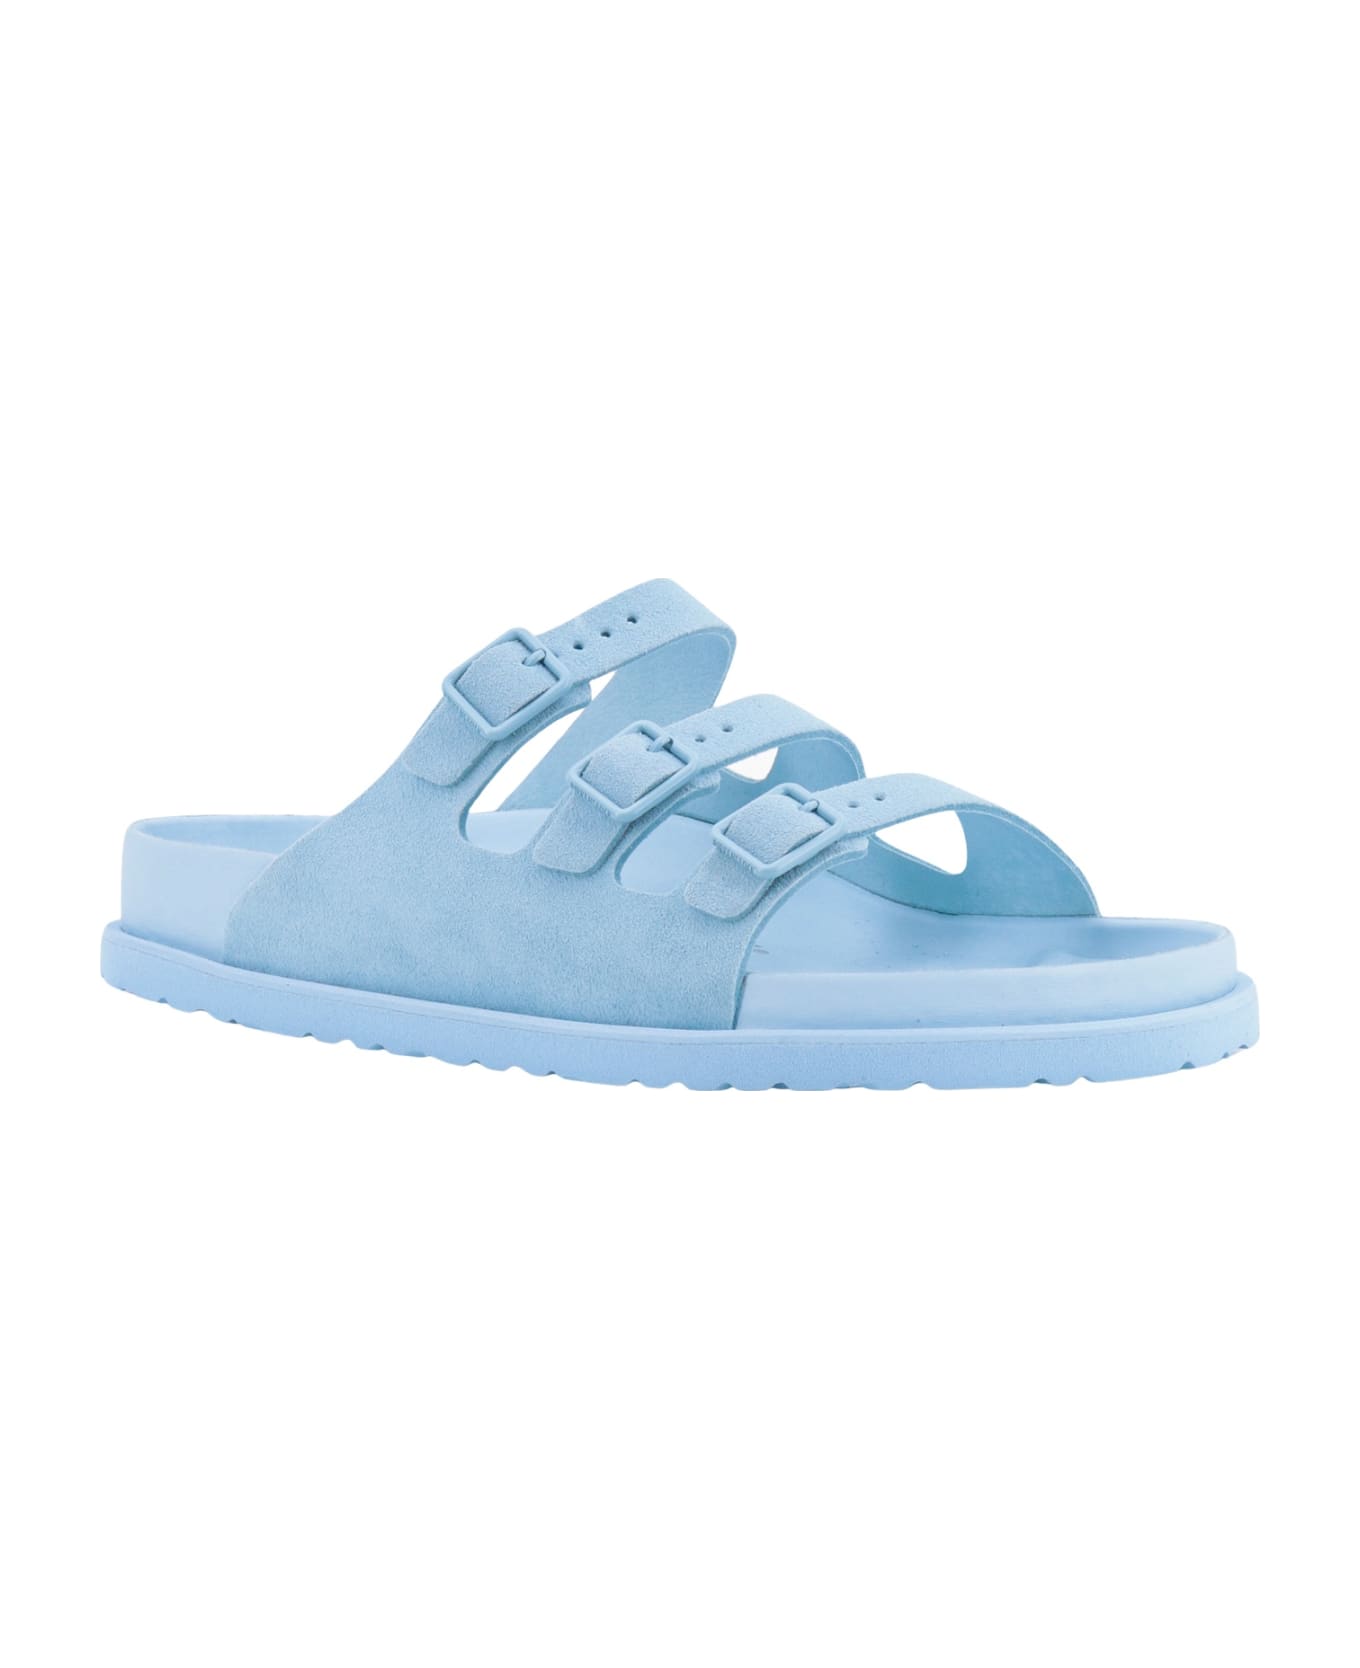 Birkenstock Florida Fresh Sandals - Blue